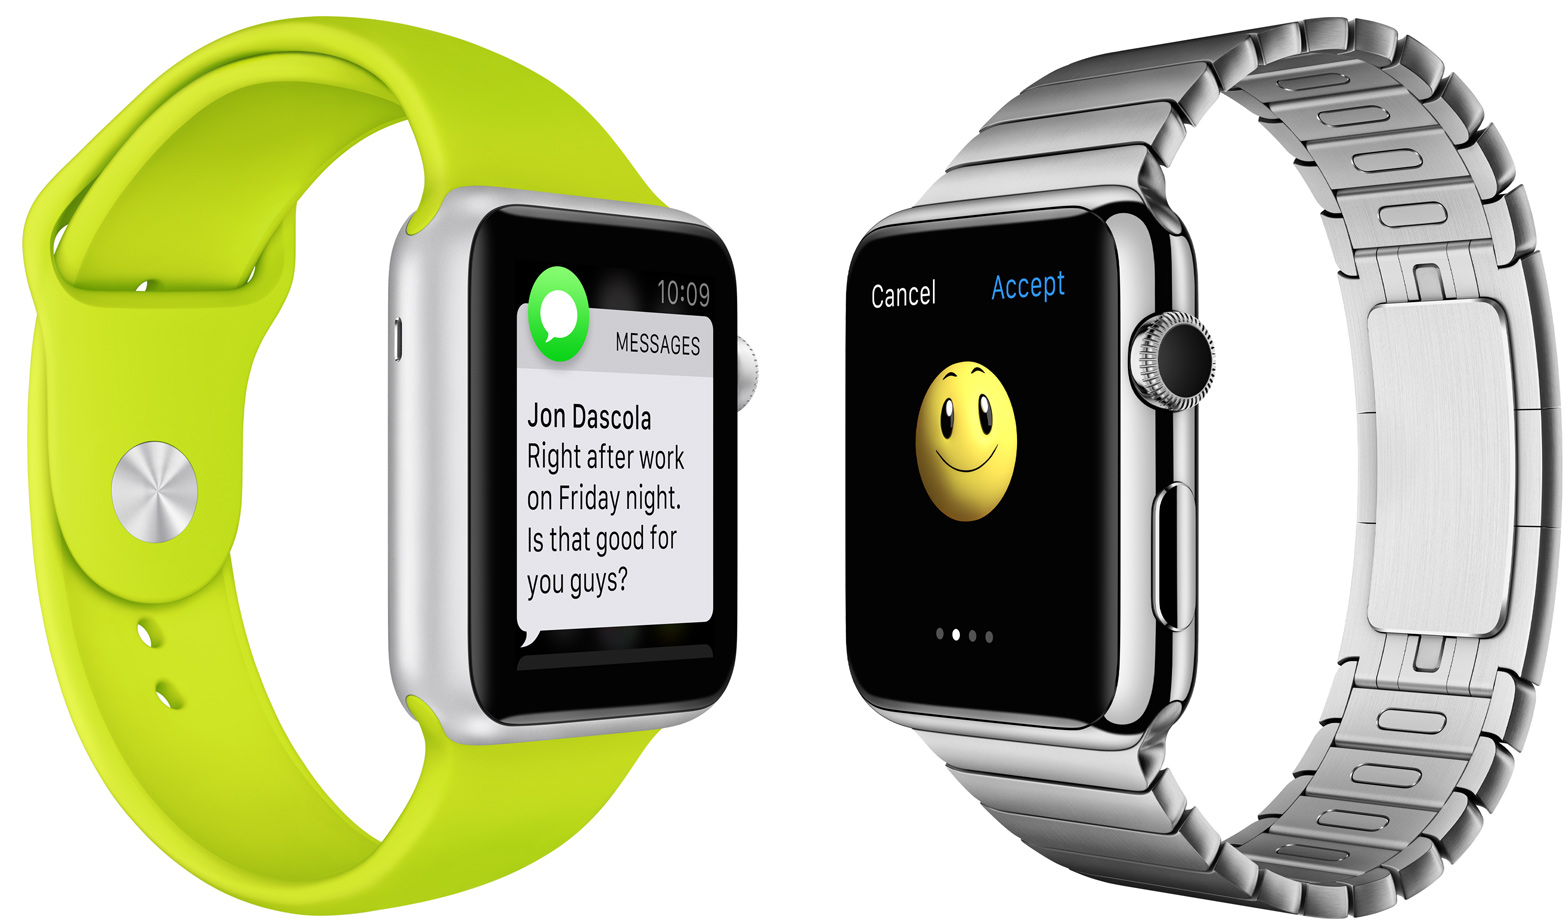 Apple Watch Messaging